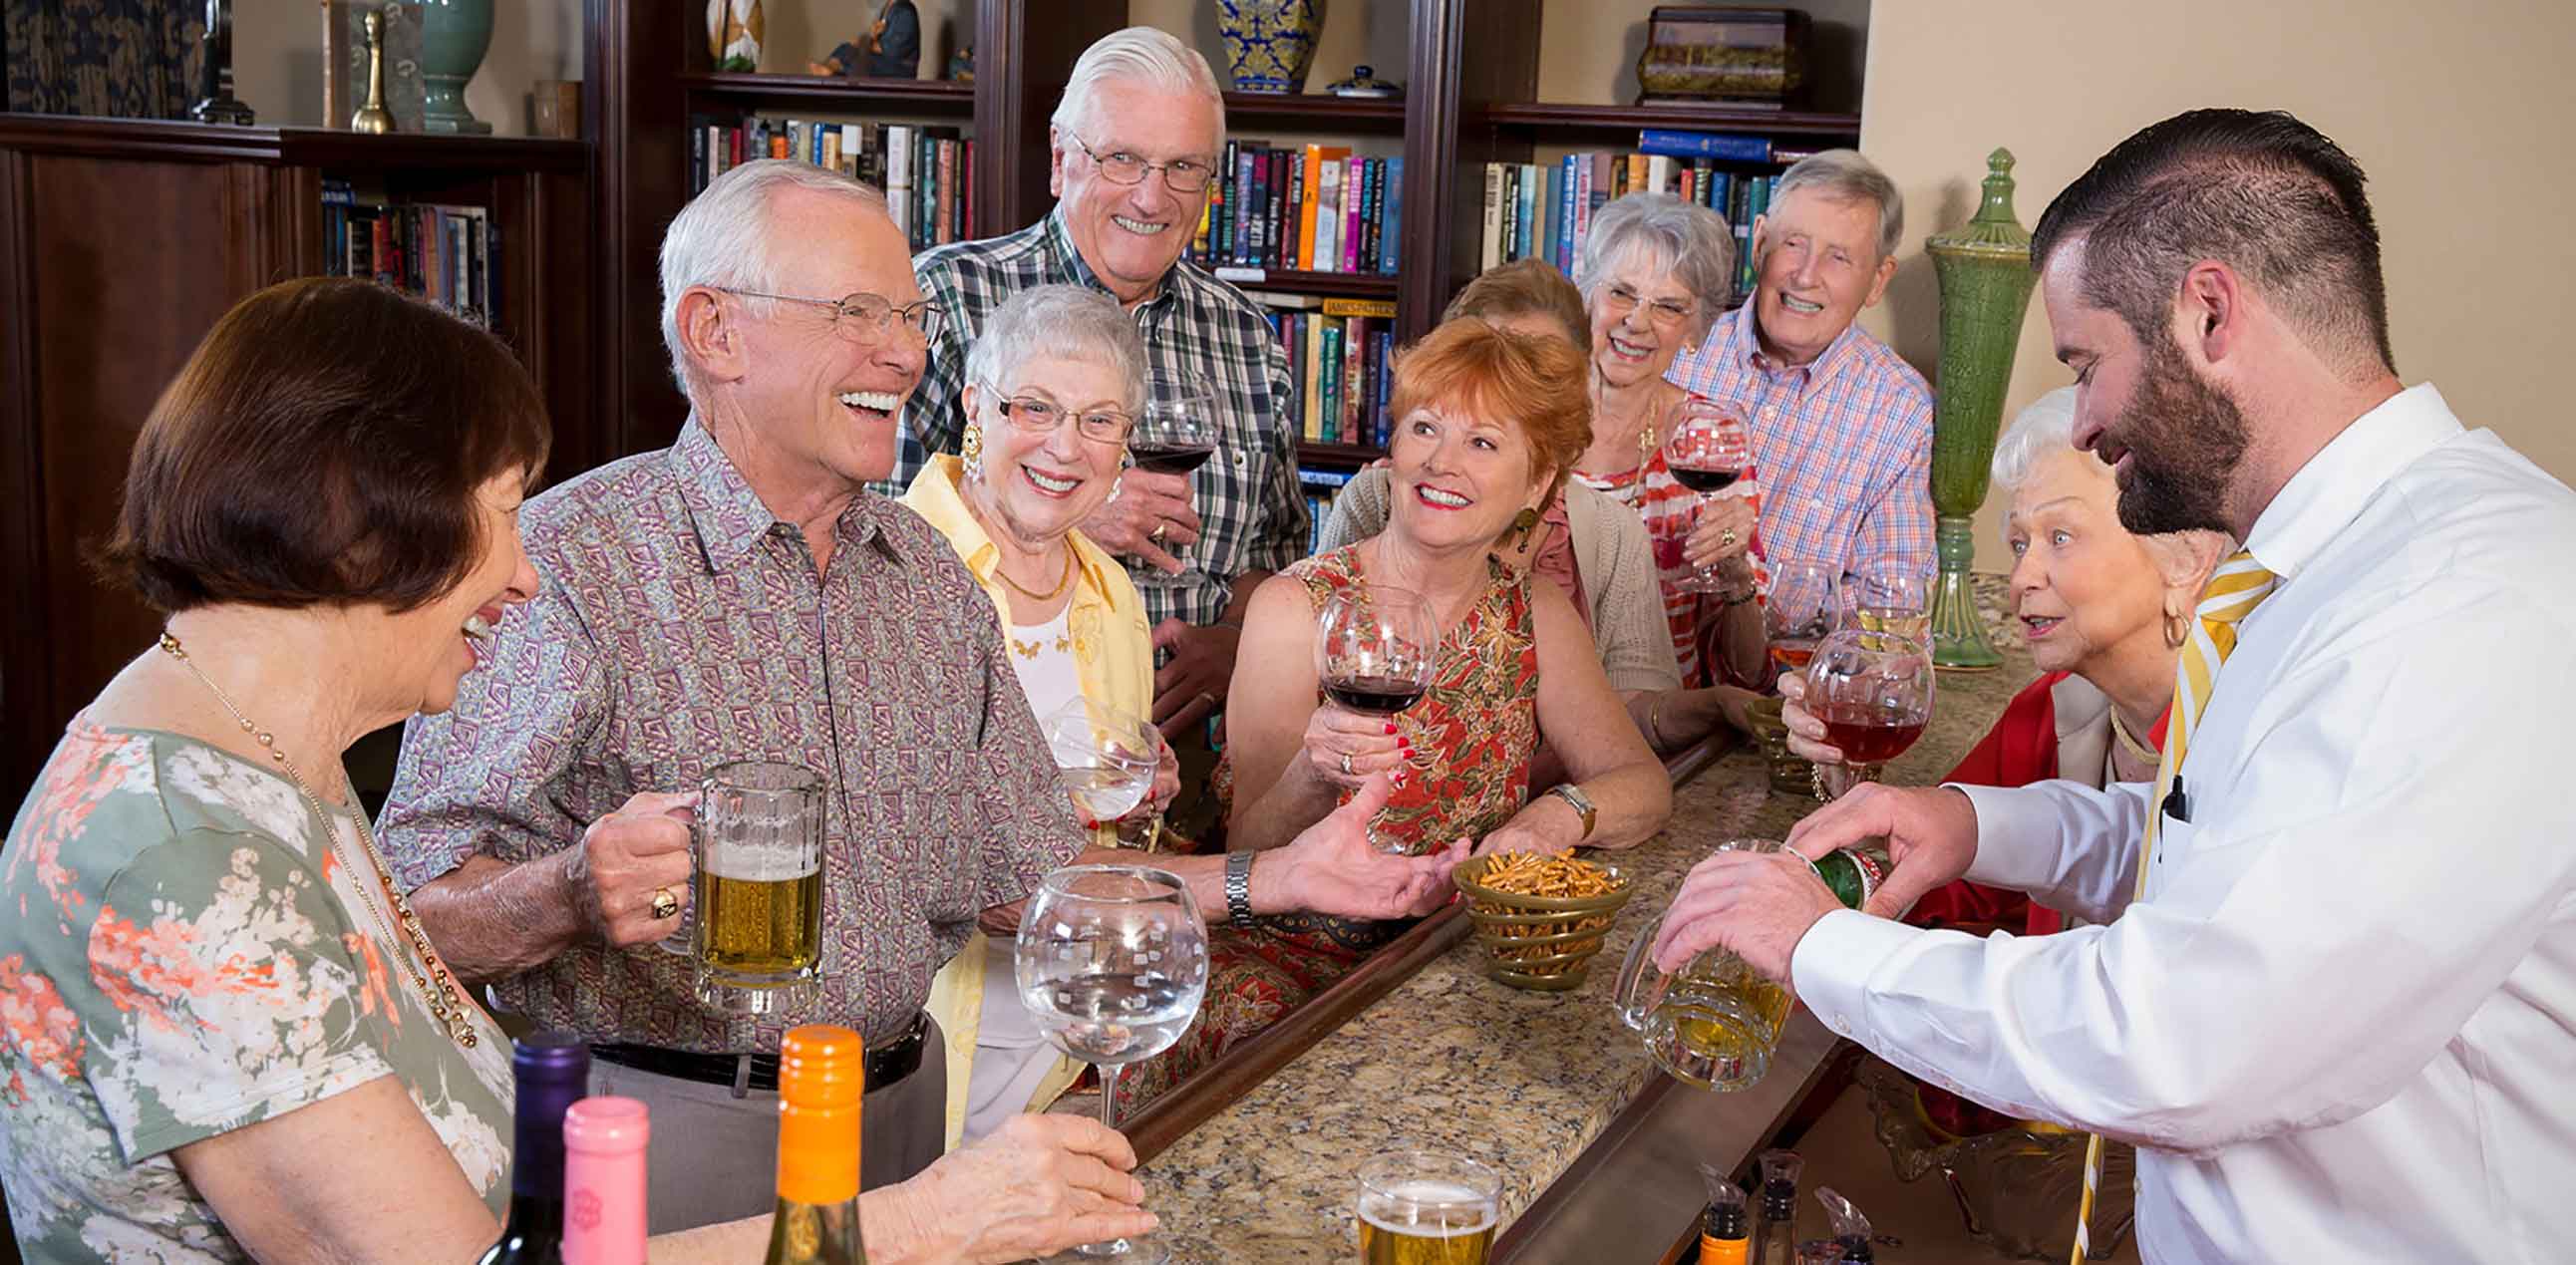 Senior citizens socializing at the bar